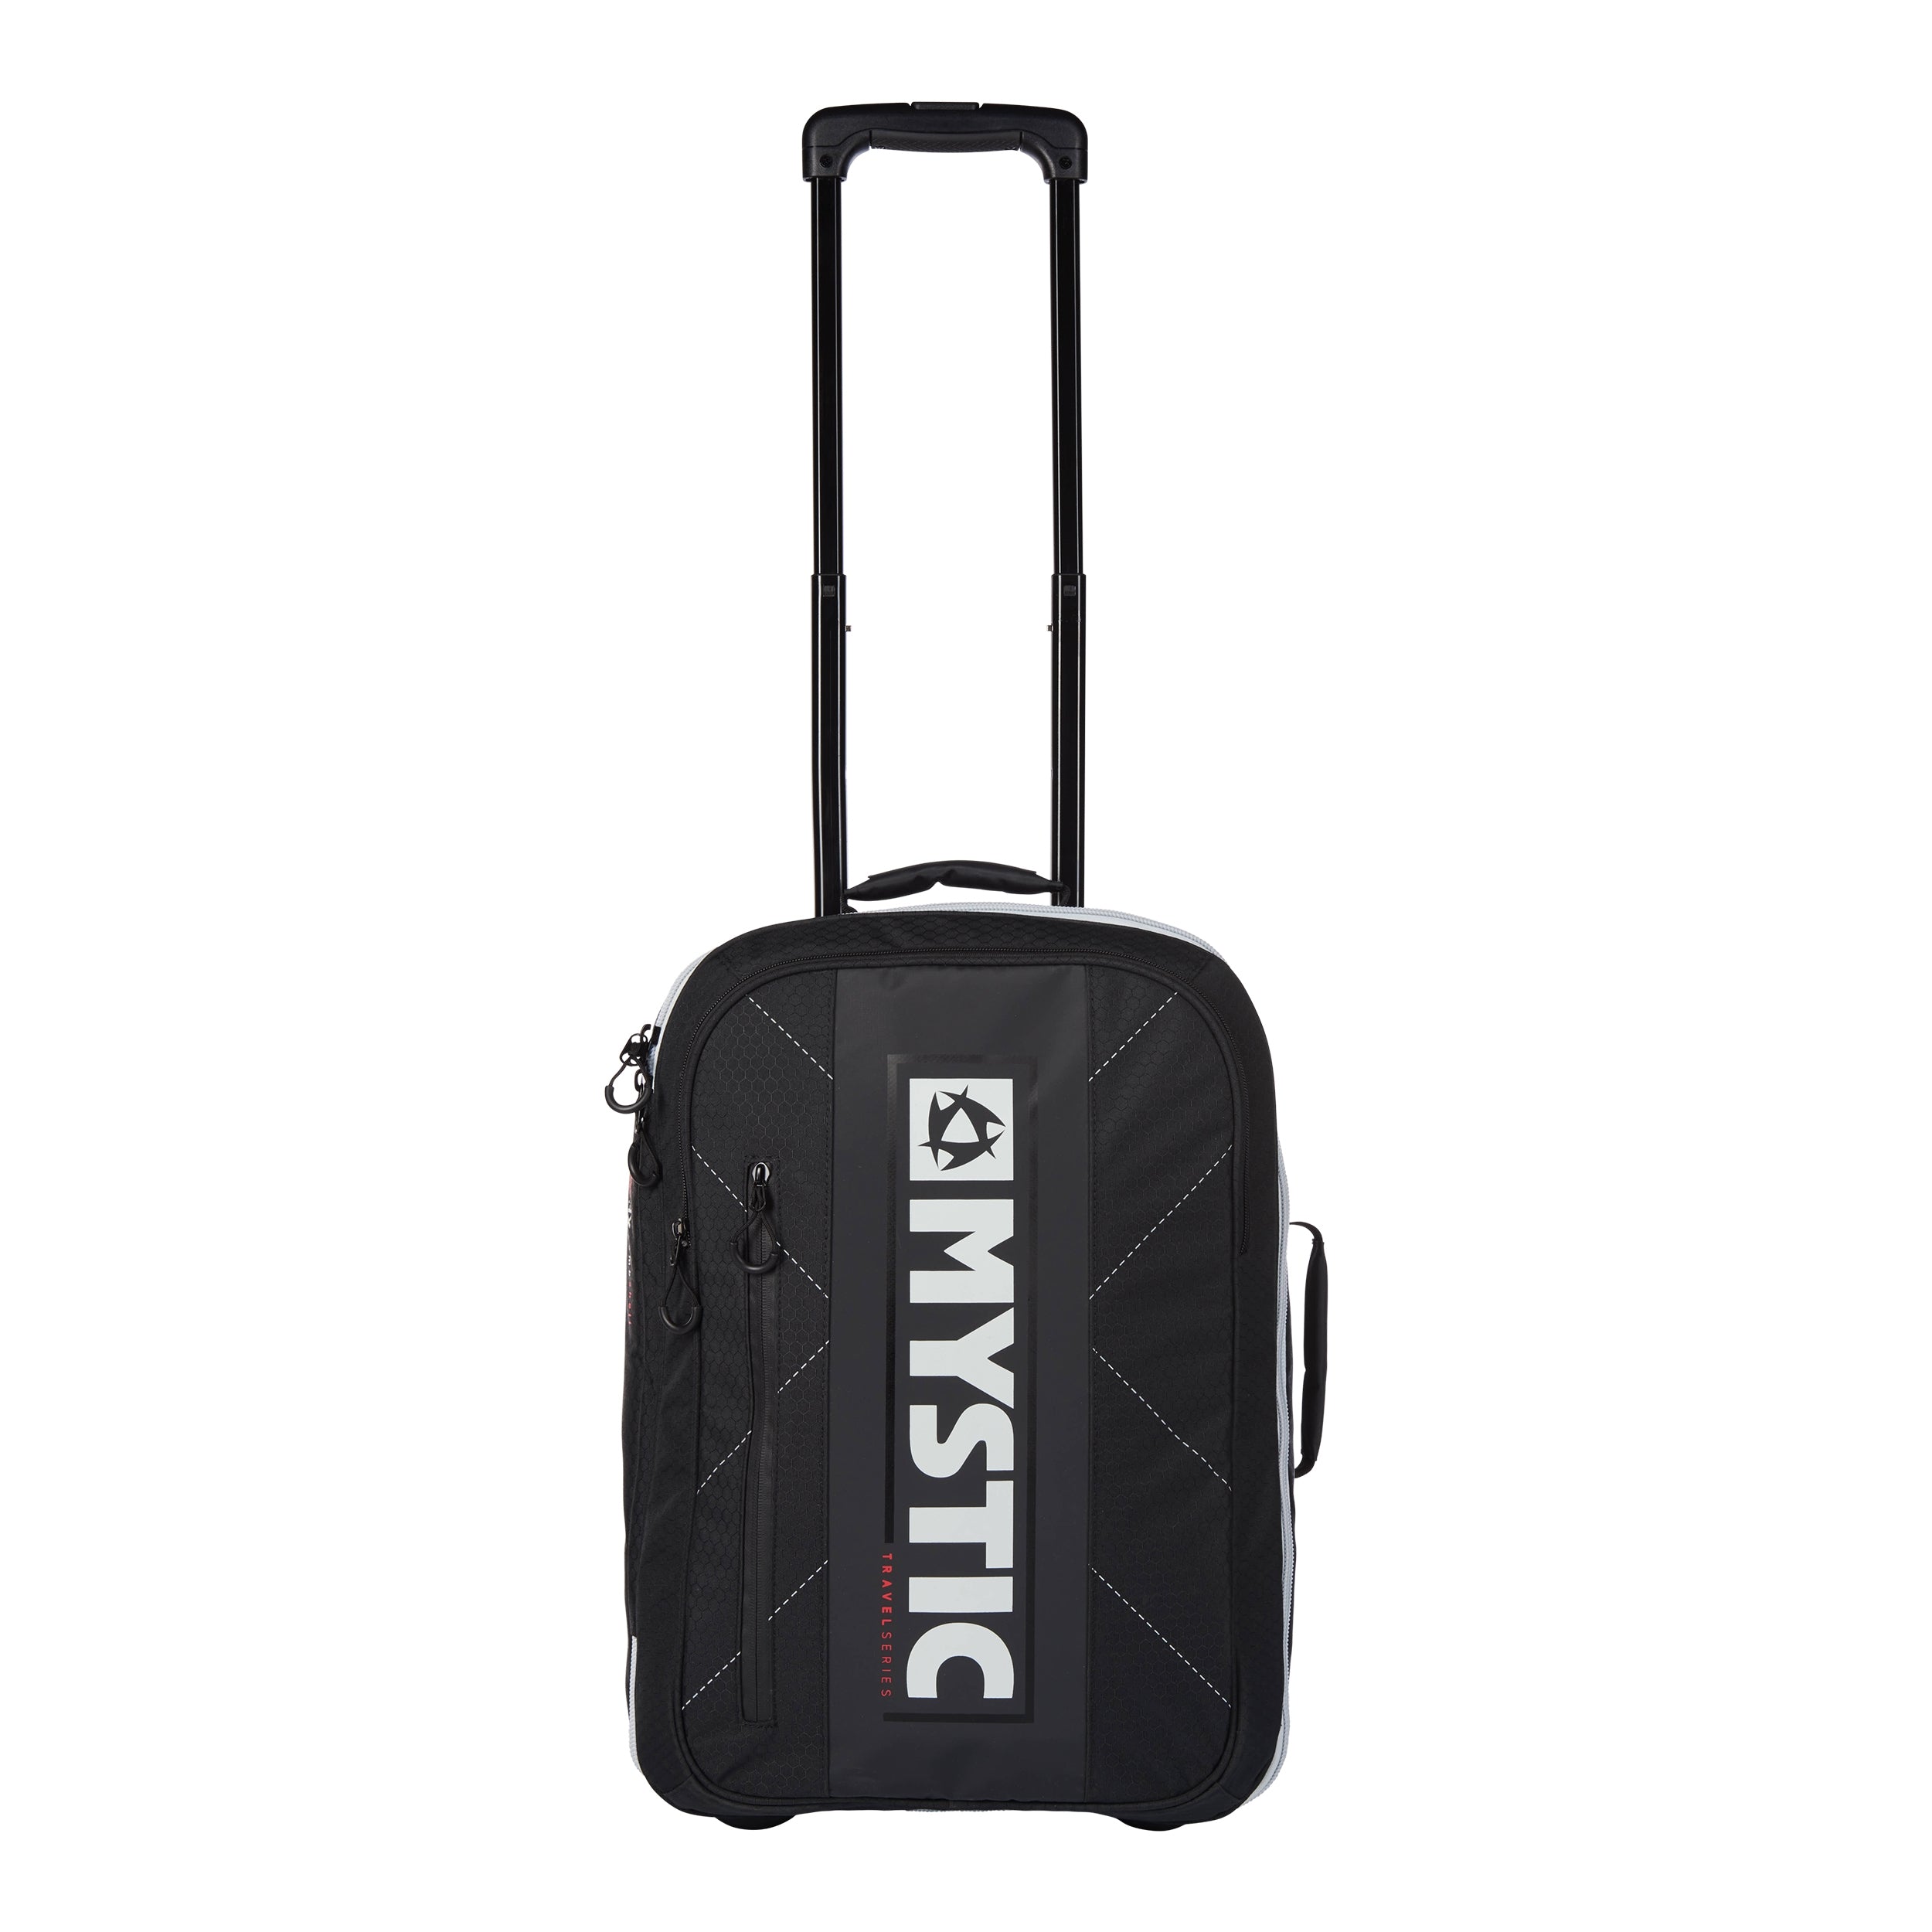 Mystic Flight/Travel Bag with Wheels